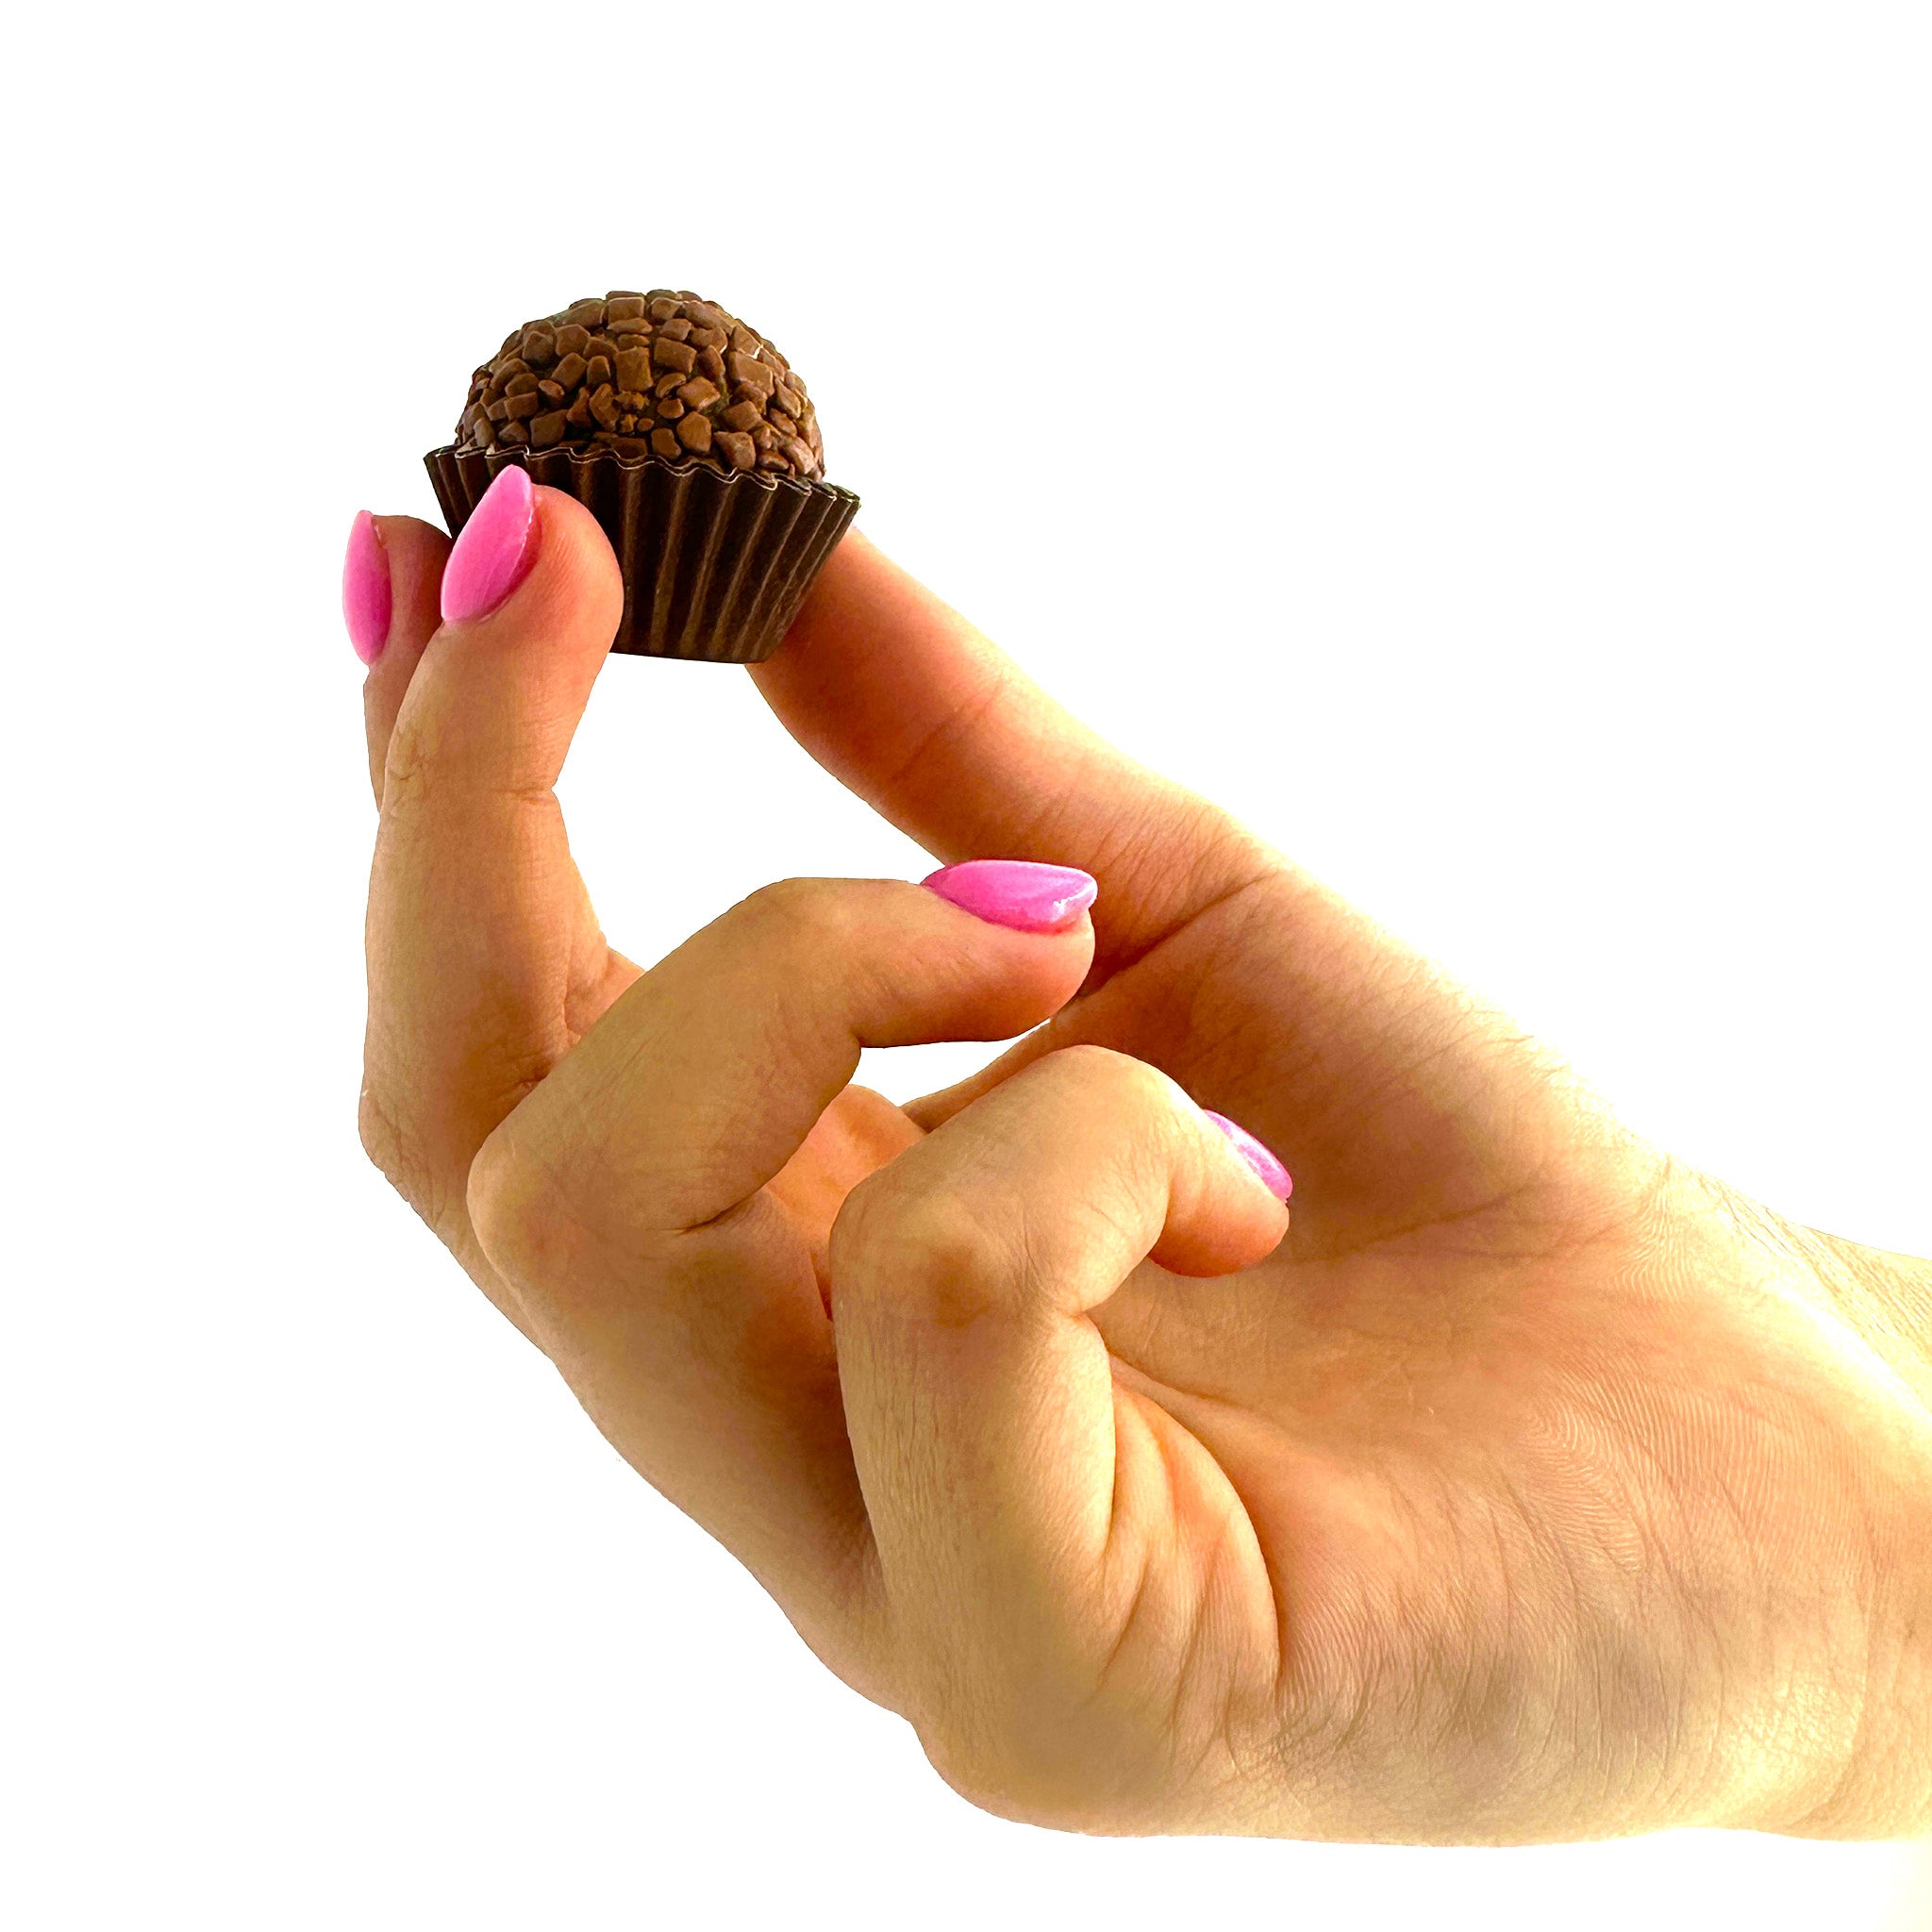 An Anniversary Chocolate Lovers Brigadeiros lover holding a brigadeiro truffle.